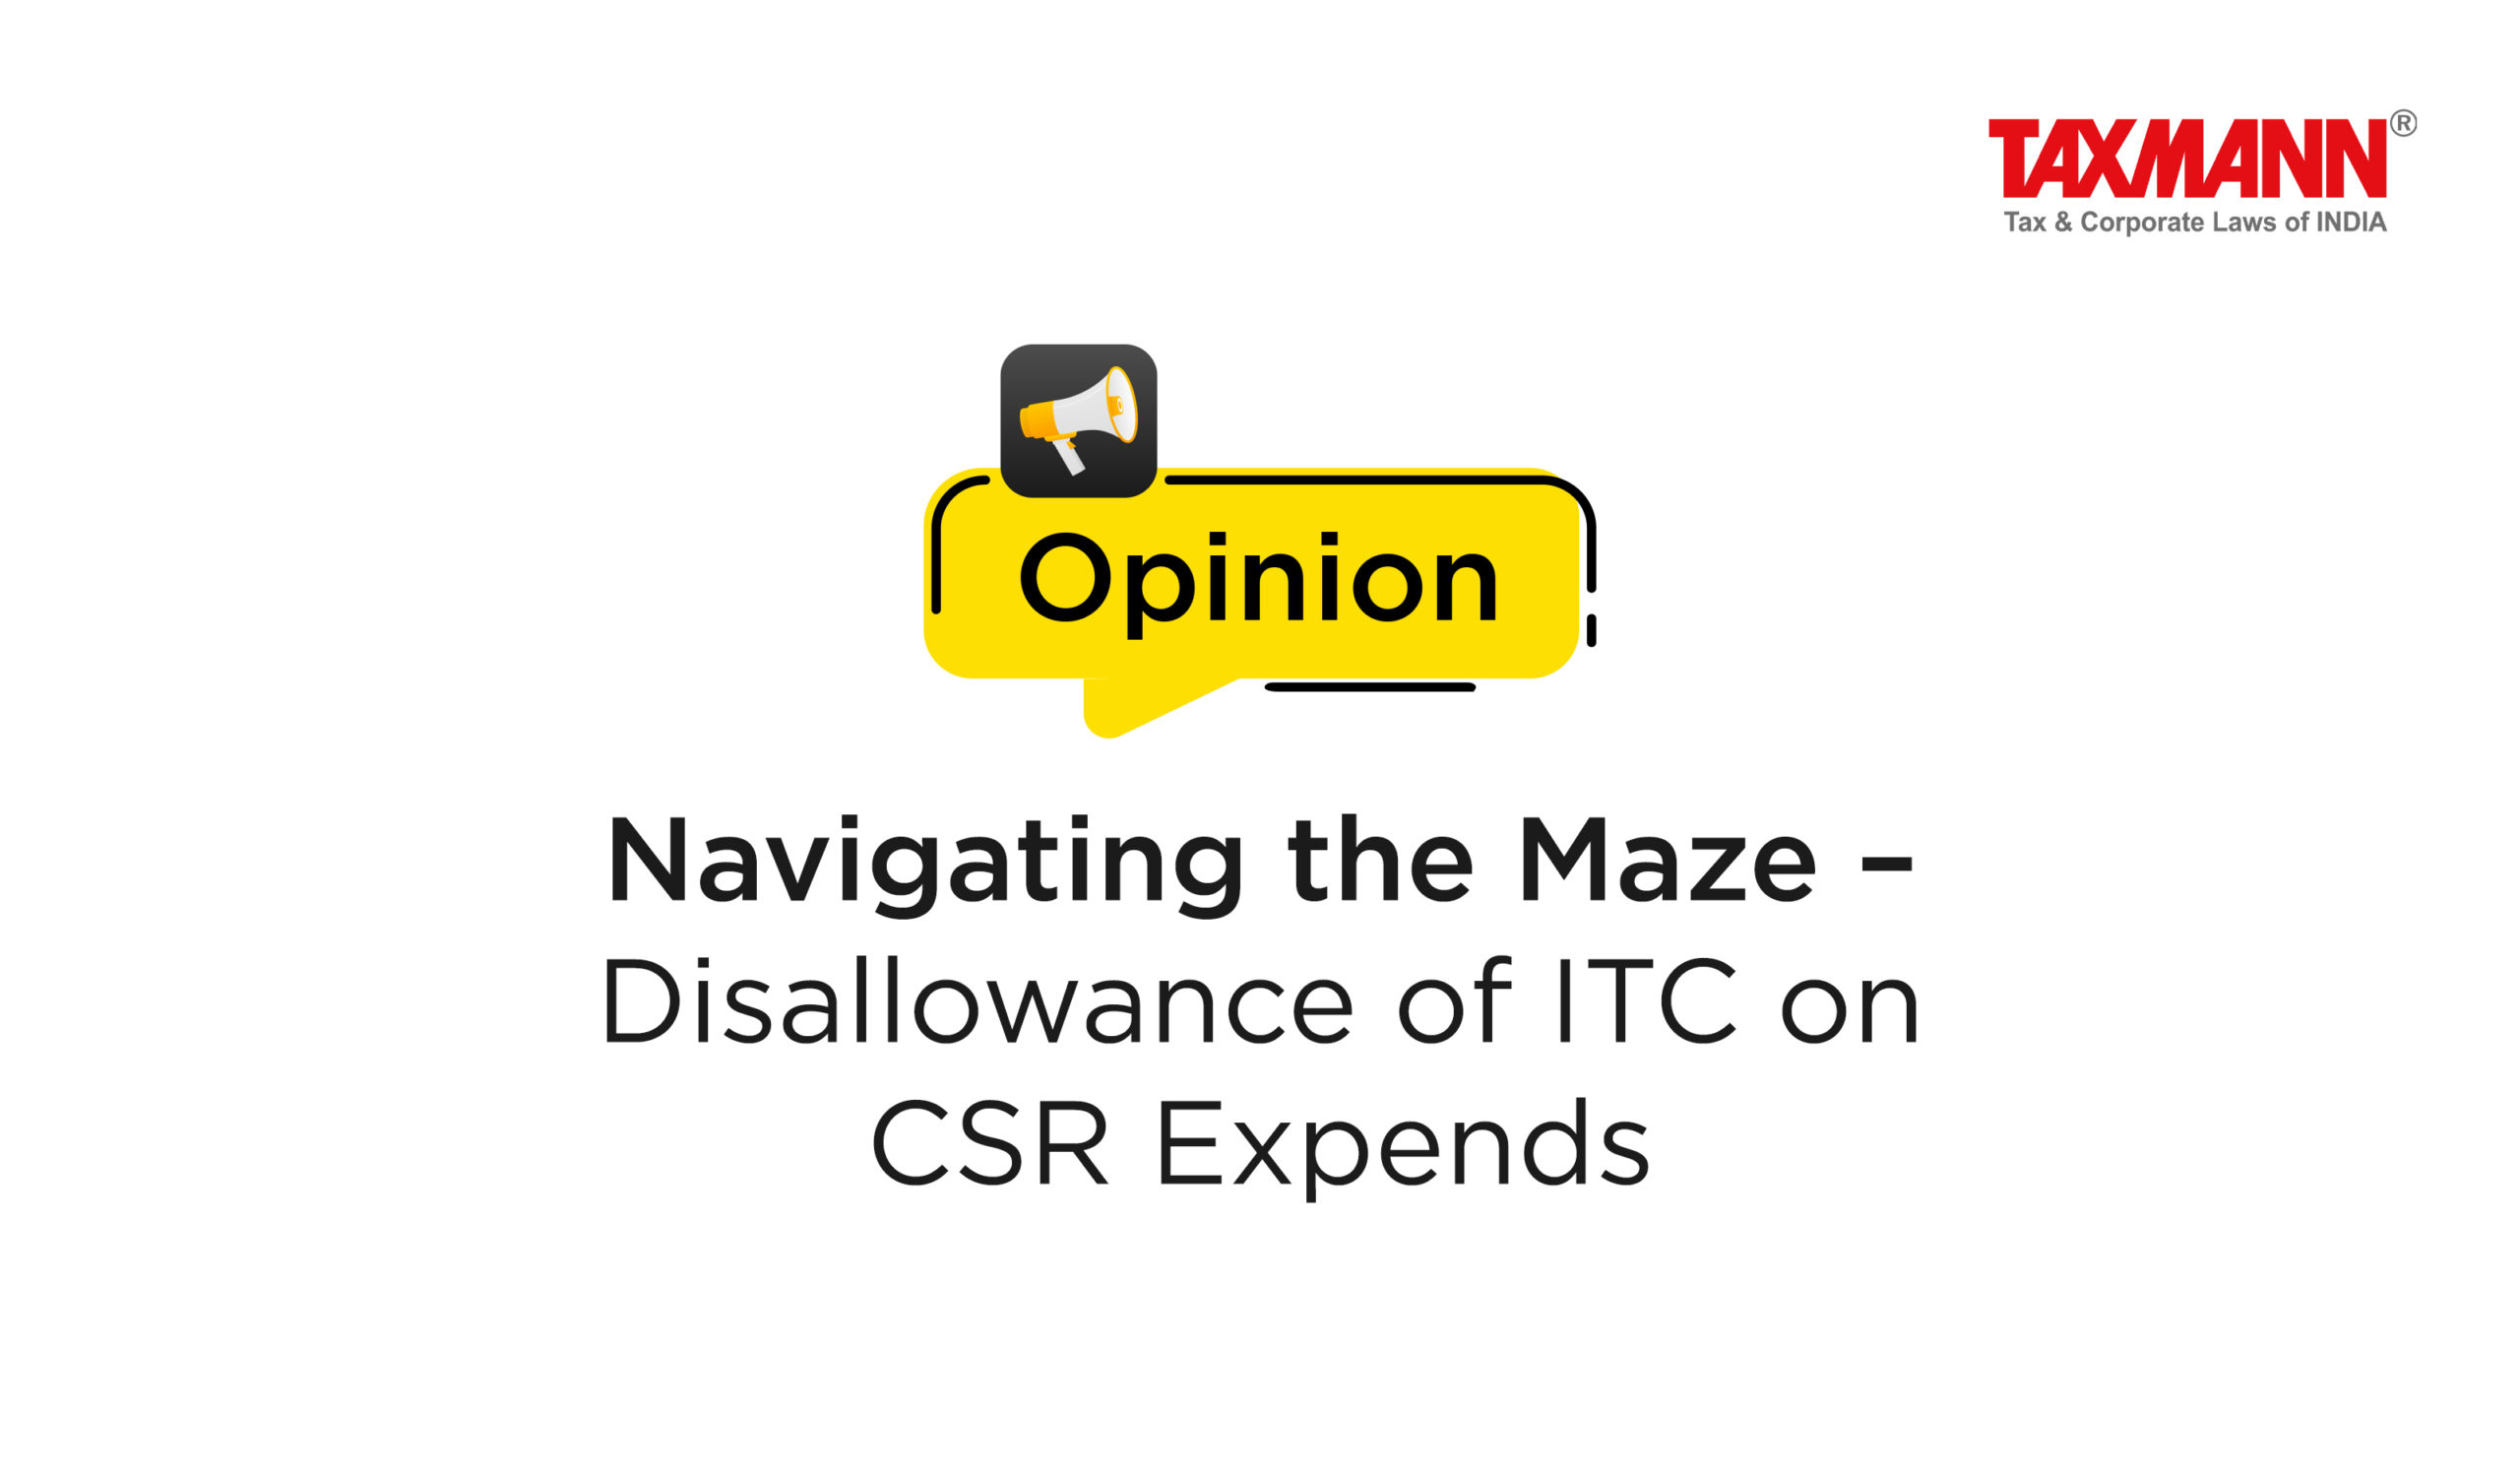 ITC on CSR expends